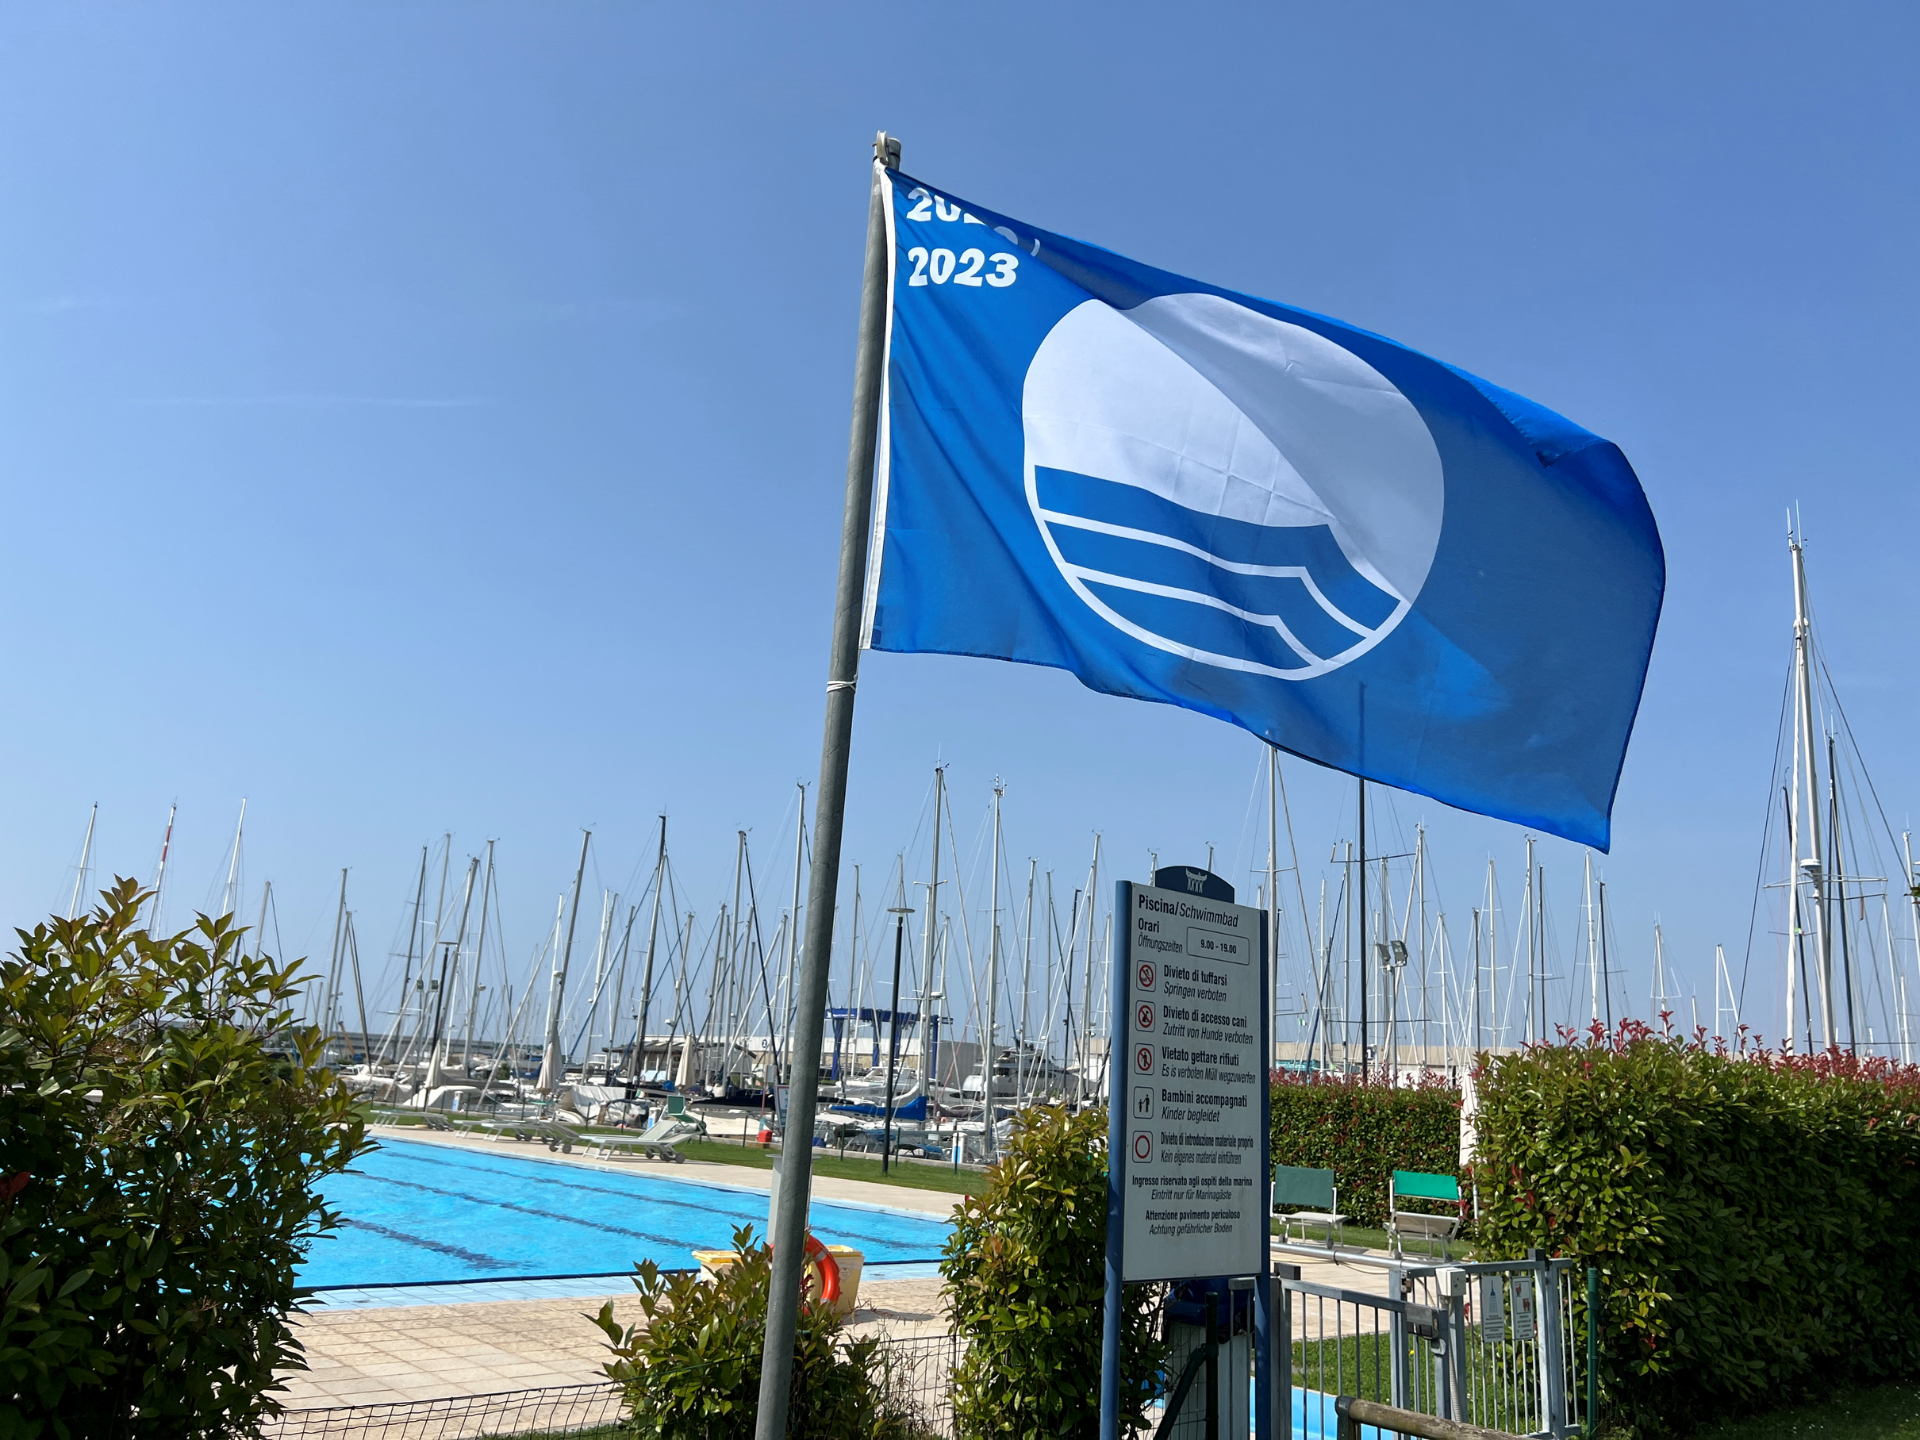 Blaue Flagge vor Marina